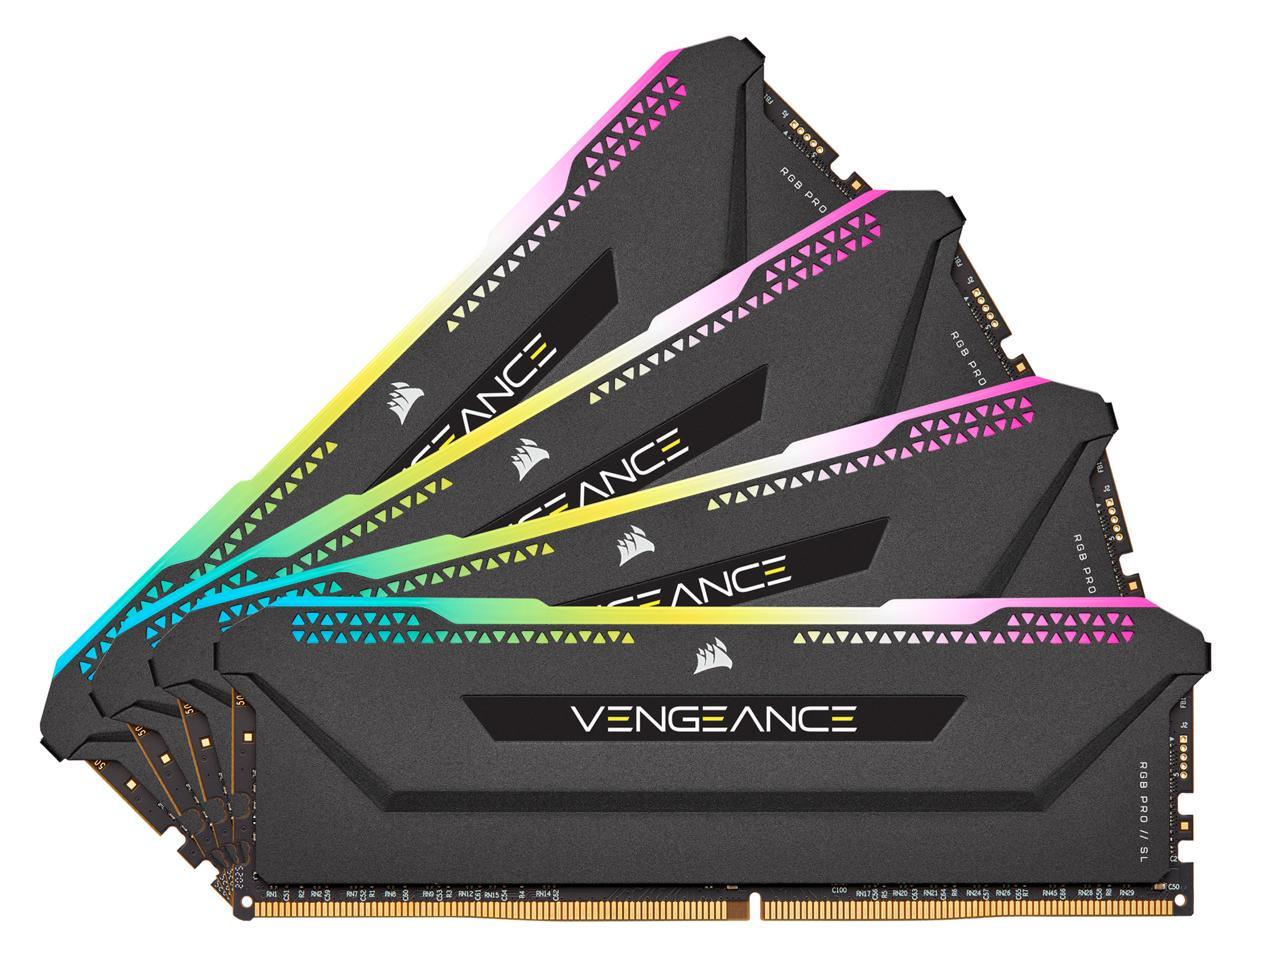 CORSAIR Vengeance RGB Pro SL 32GB (4 x 8GB) 288-Pin PC RAM DDR4 3200